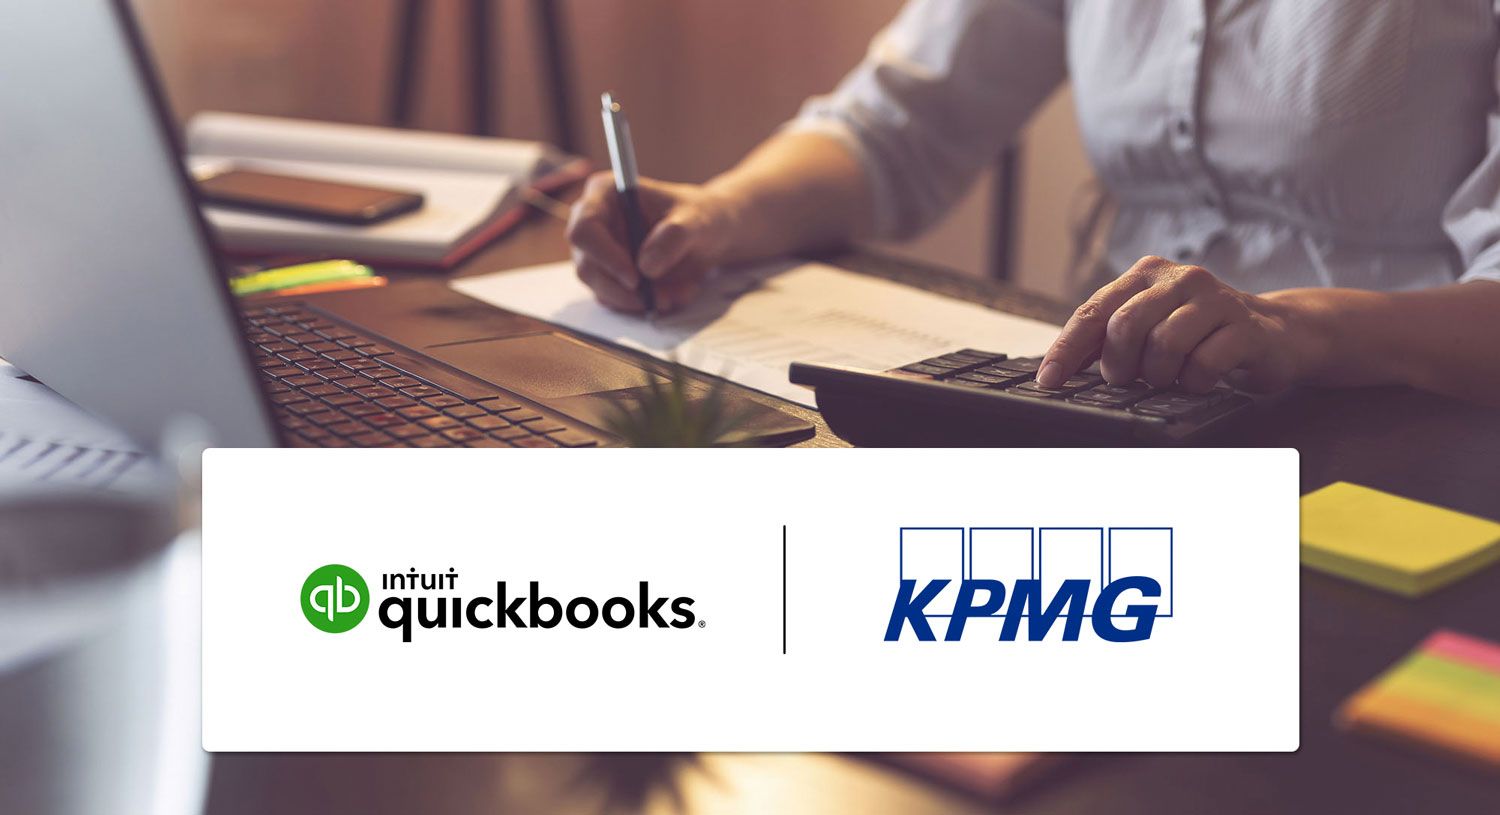 Intuit Quickbooks and KPMG